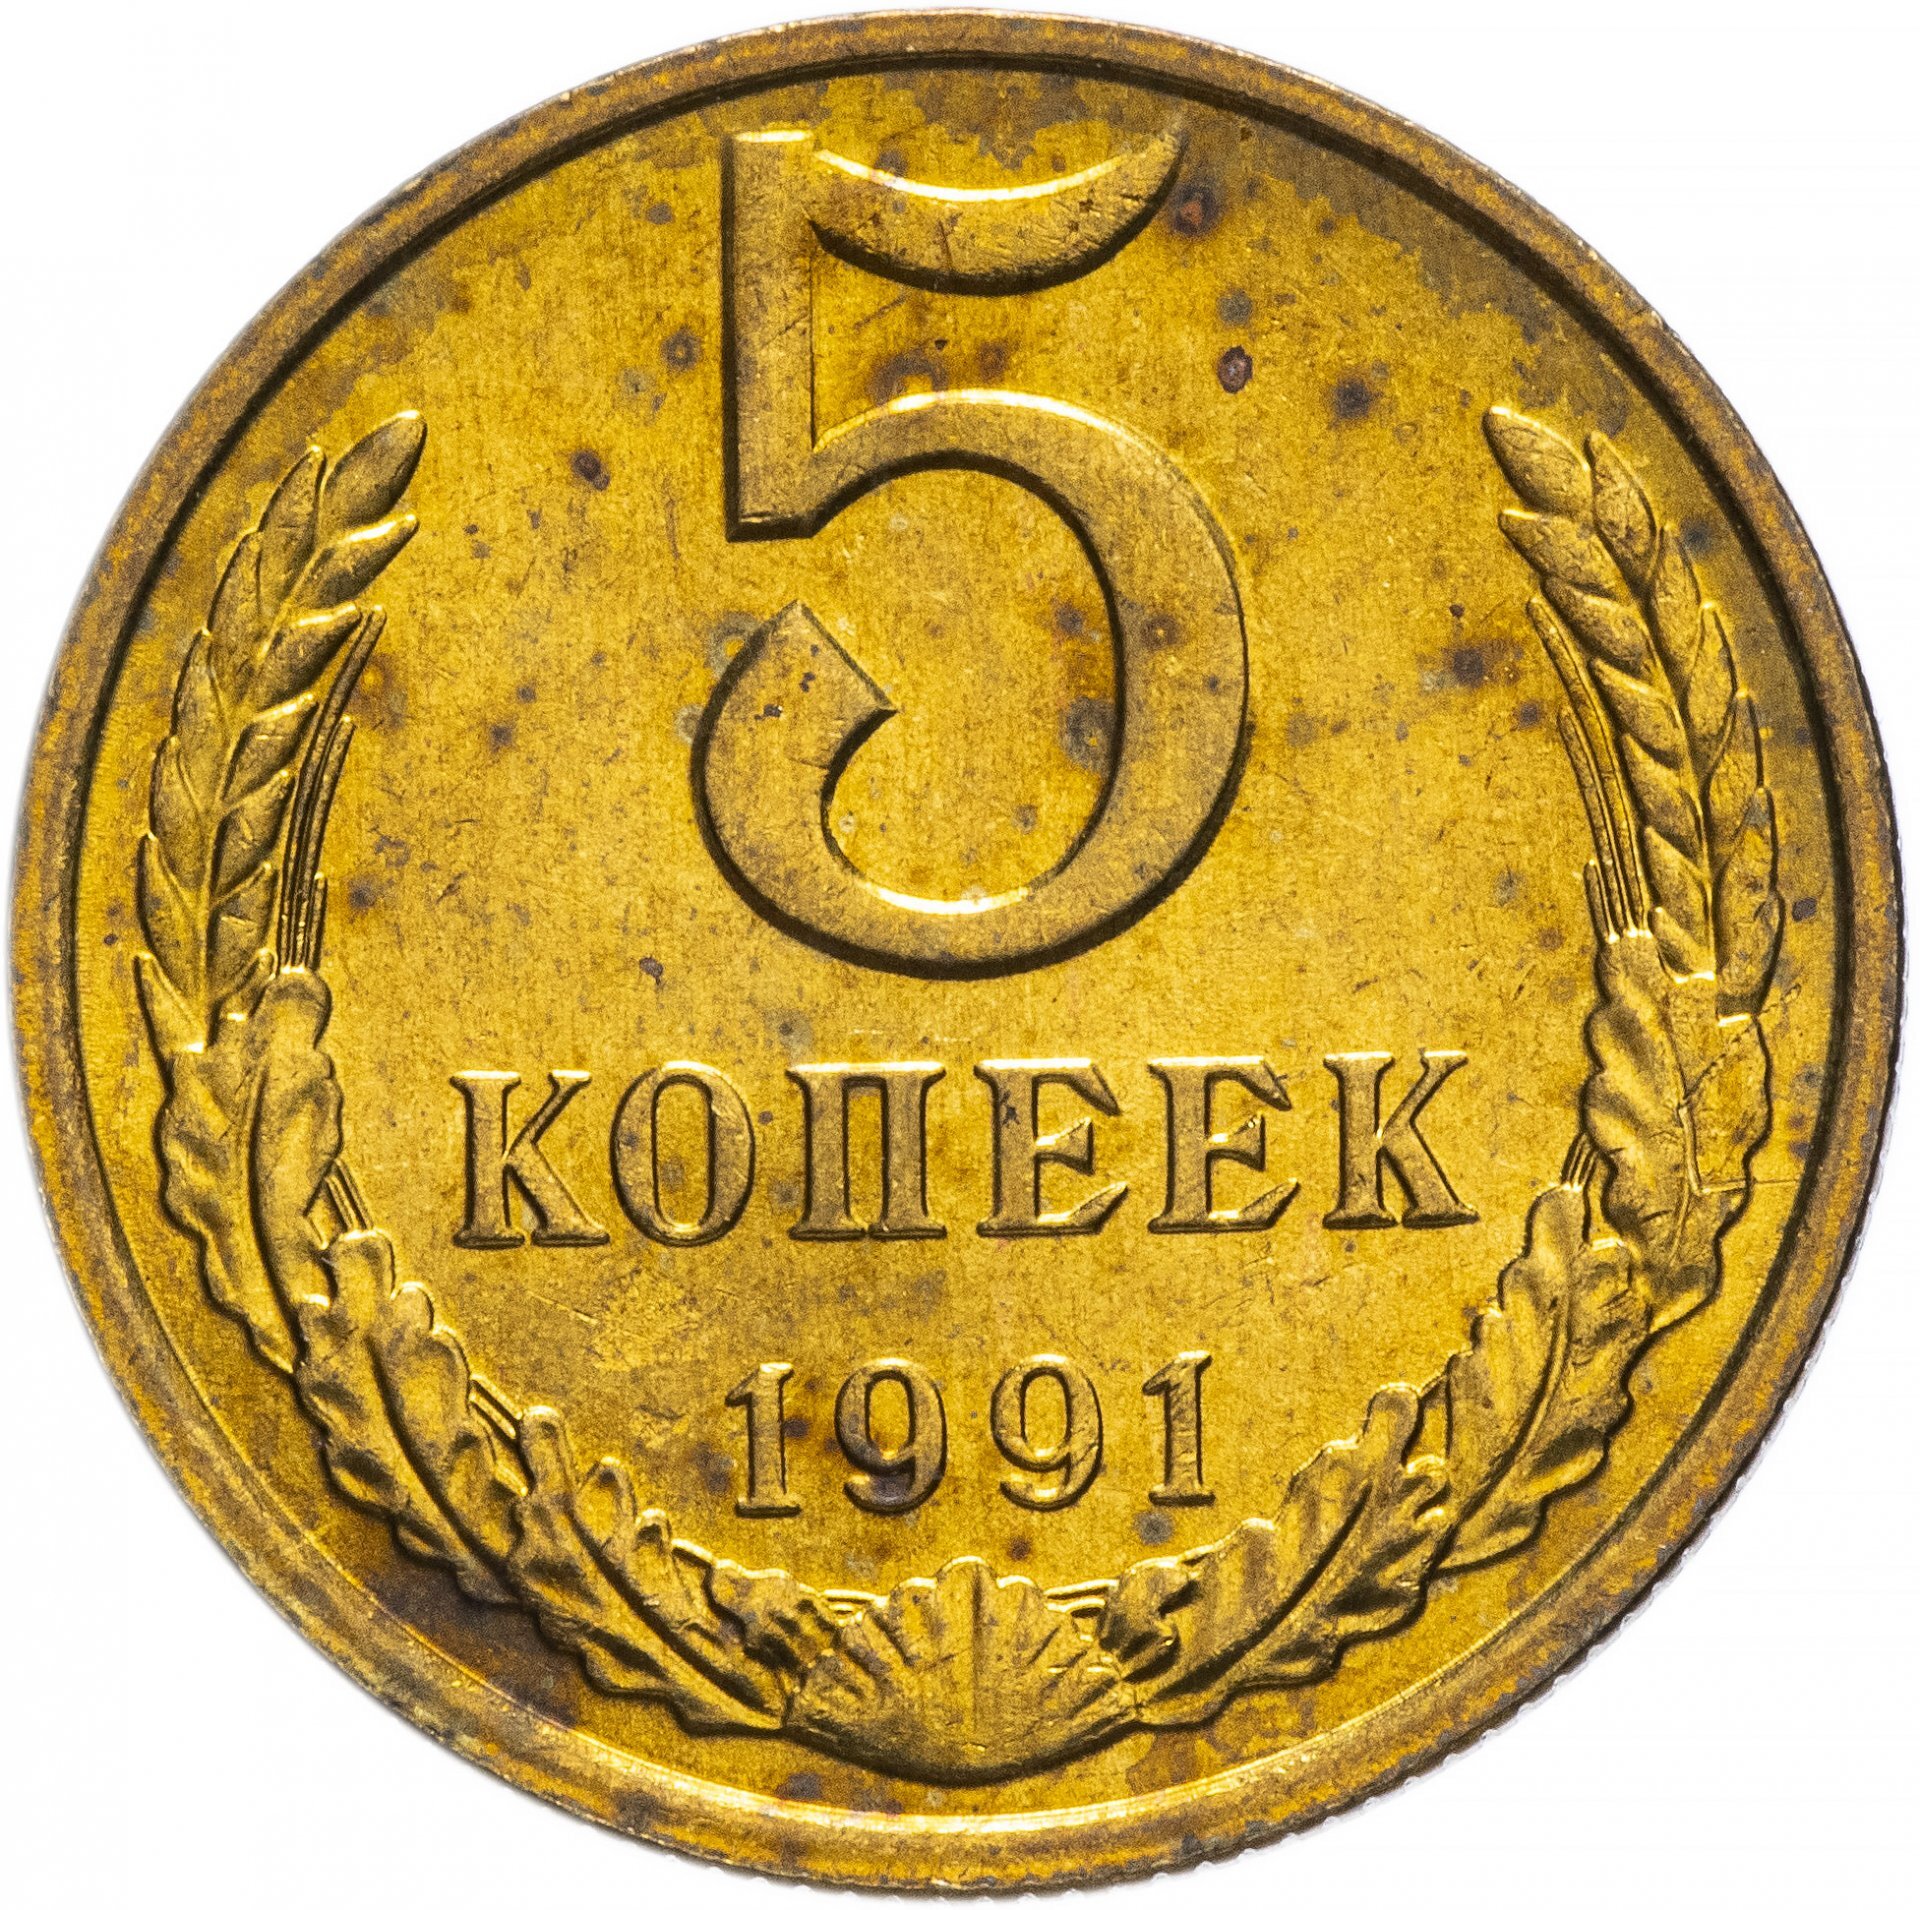 Монеты ссср 5 копеек 1961